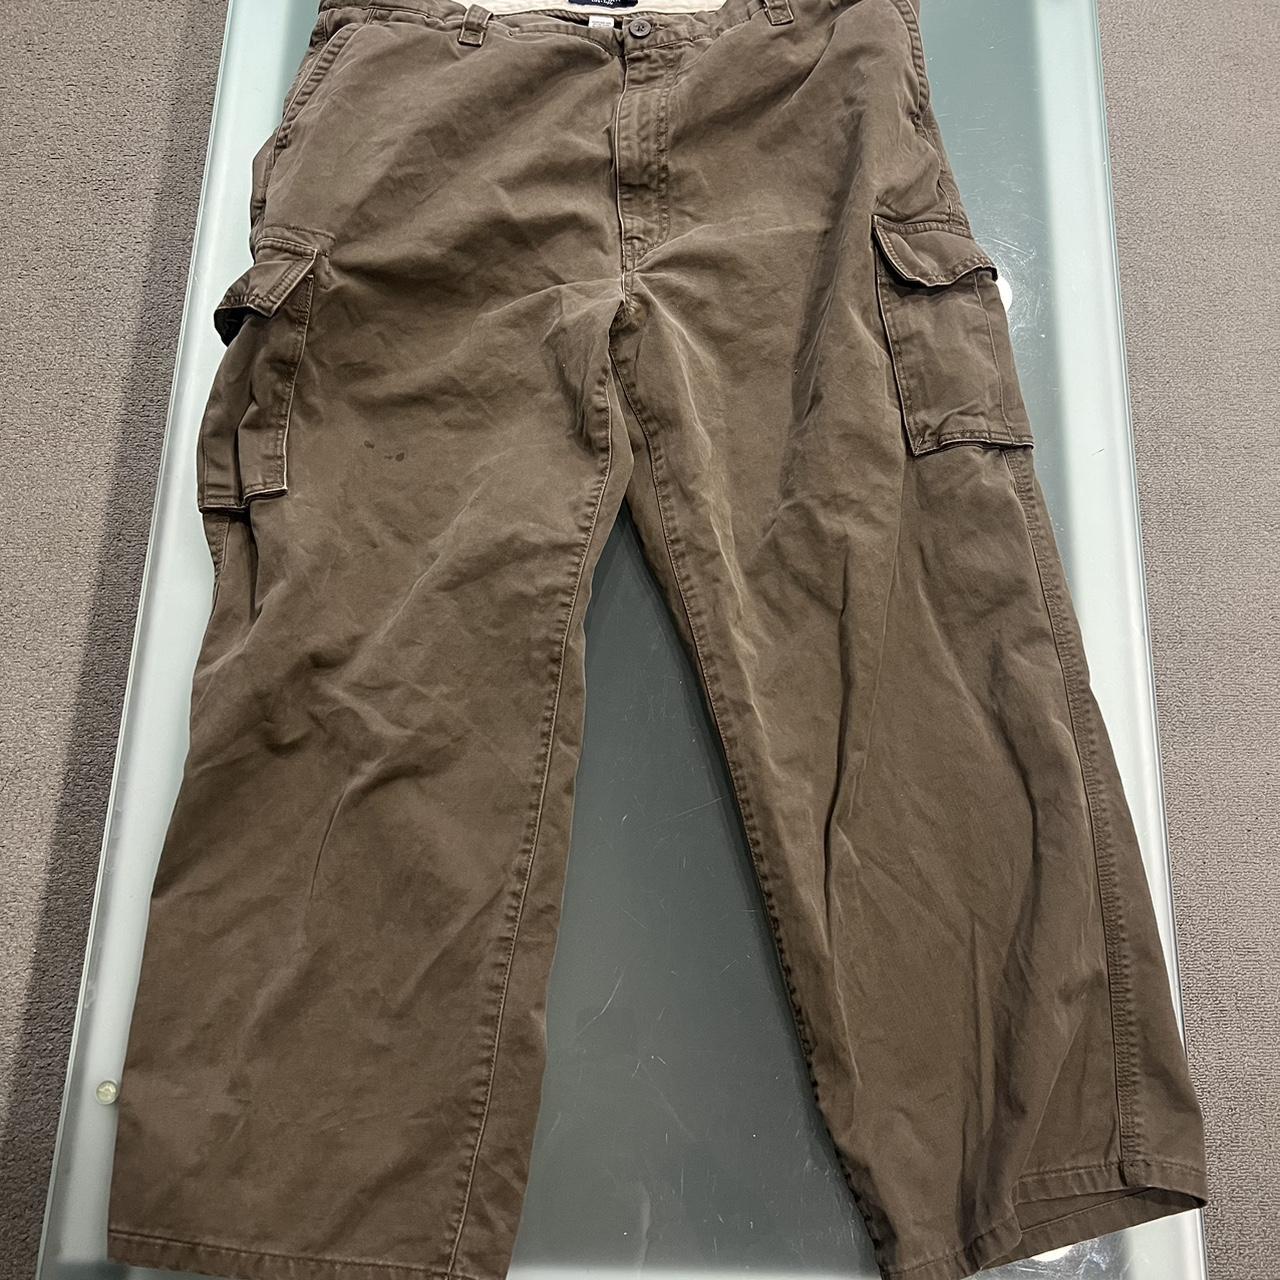  Sonoma Pants